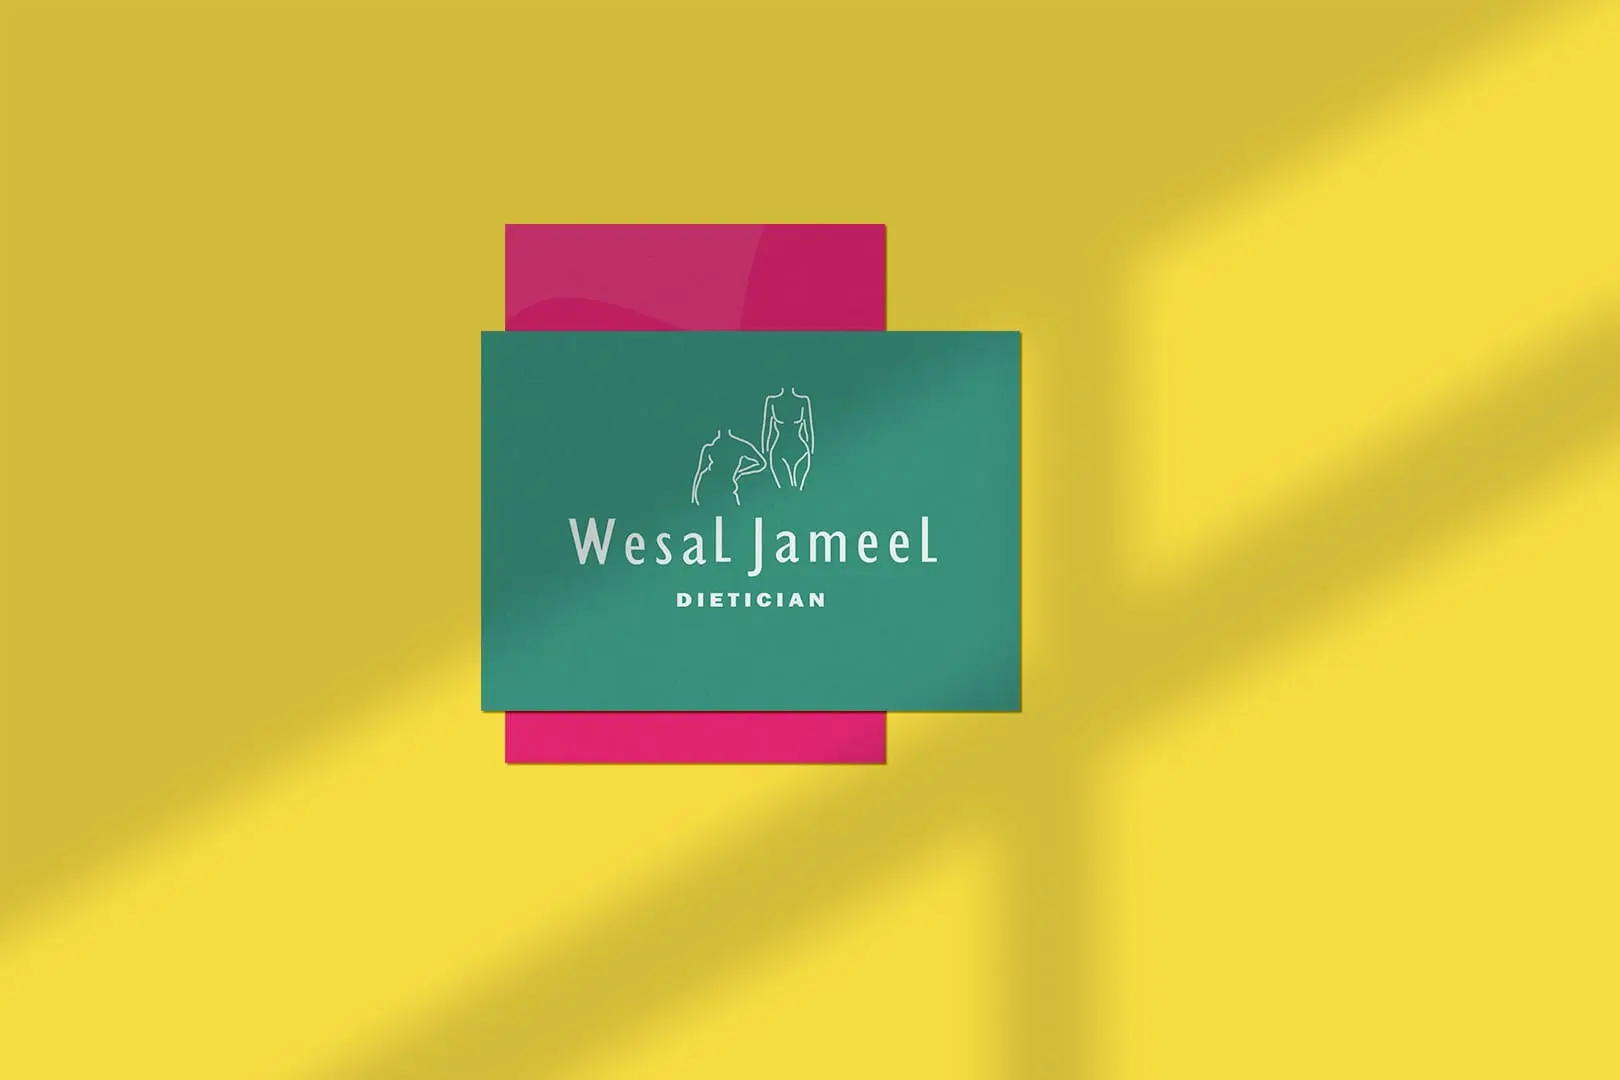 Wesal Jameel brand identity